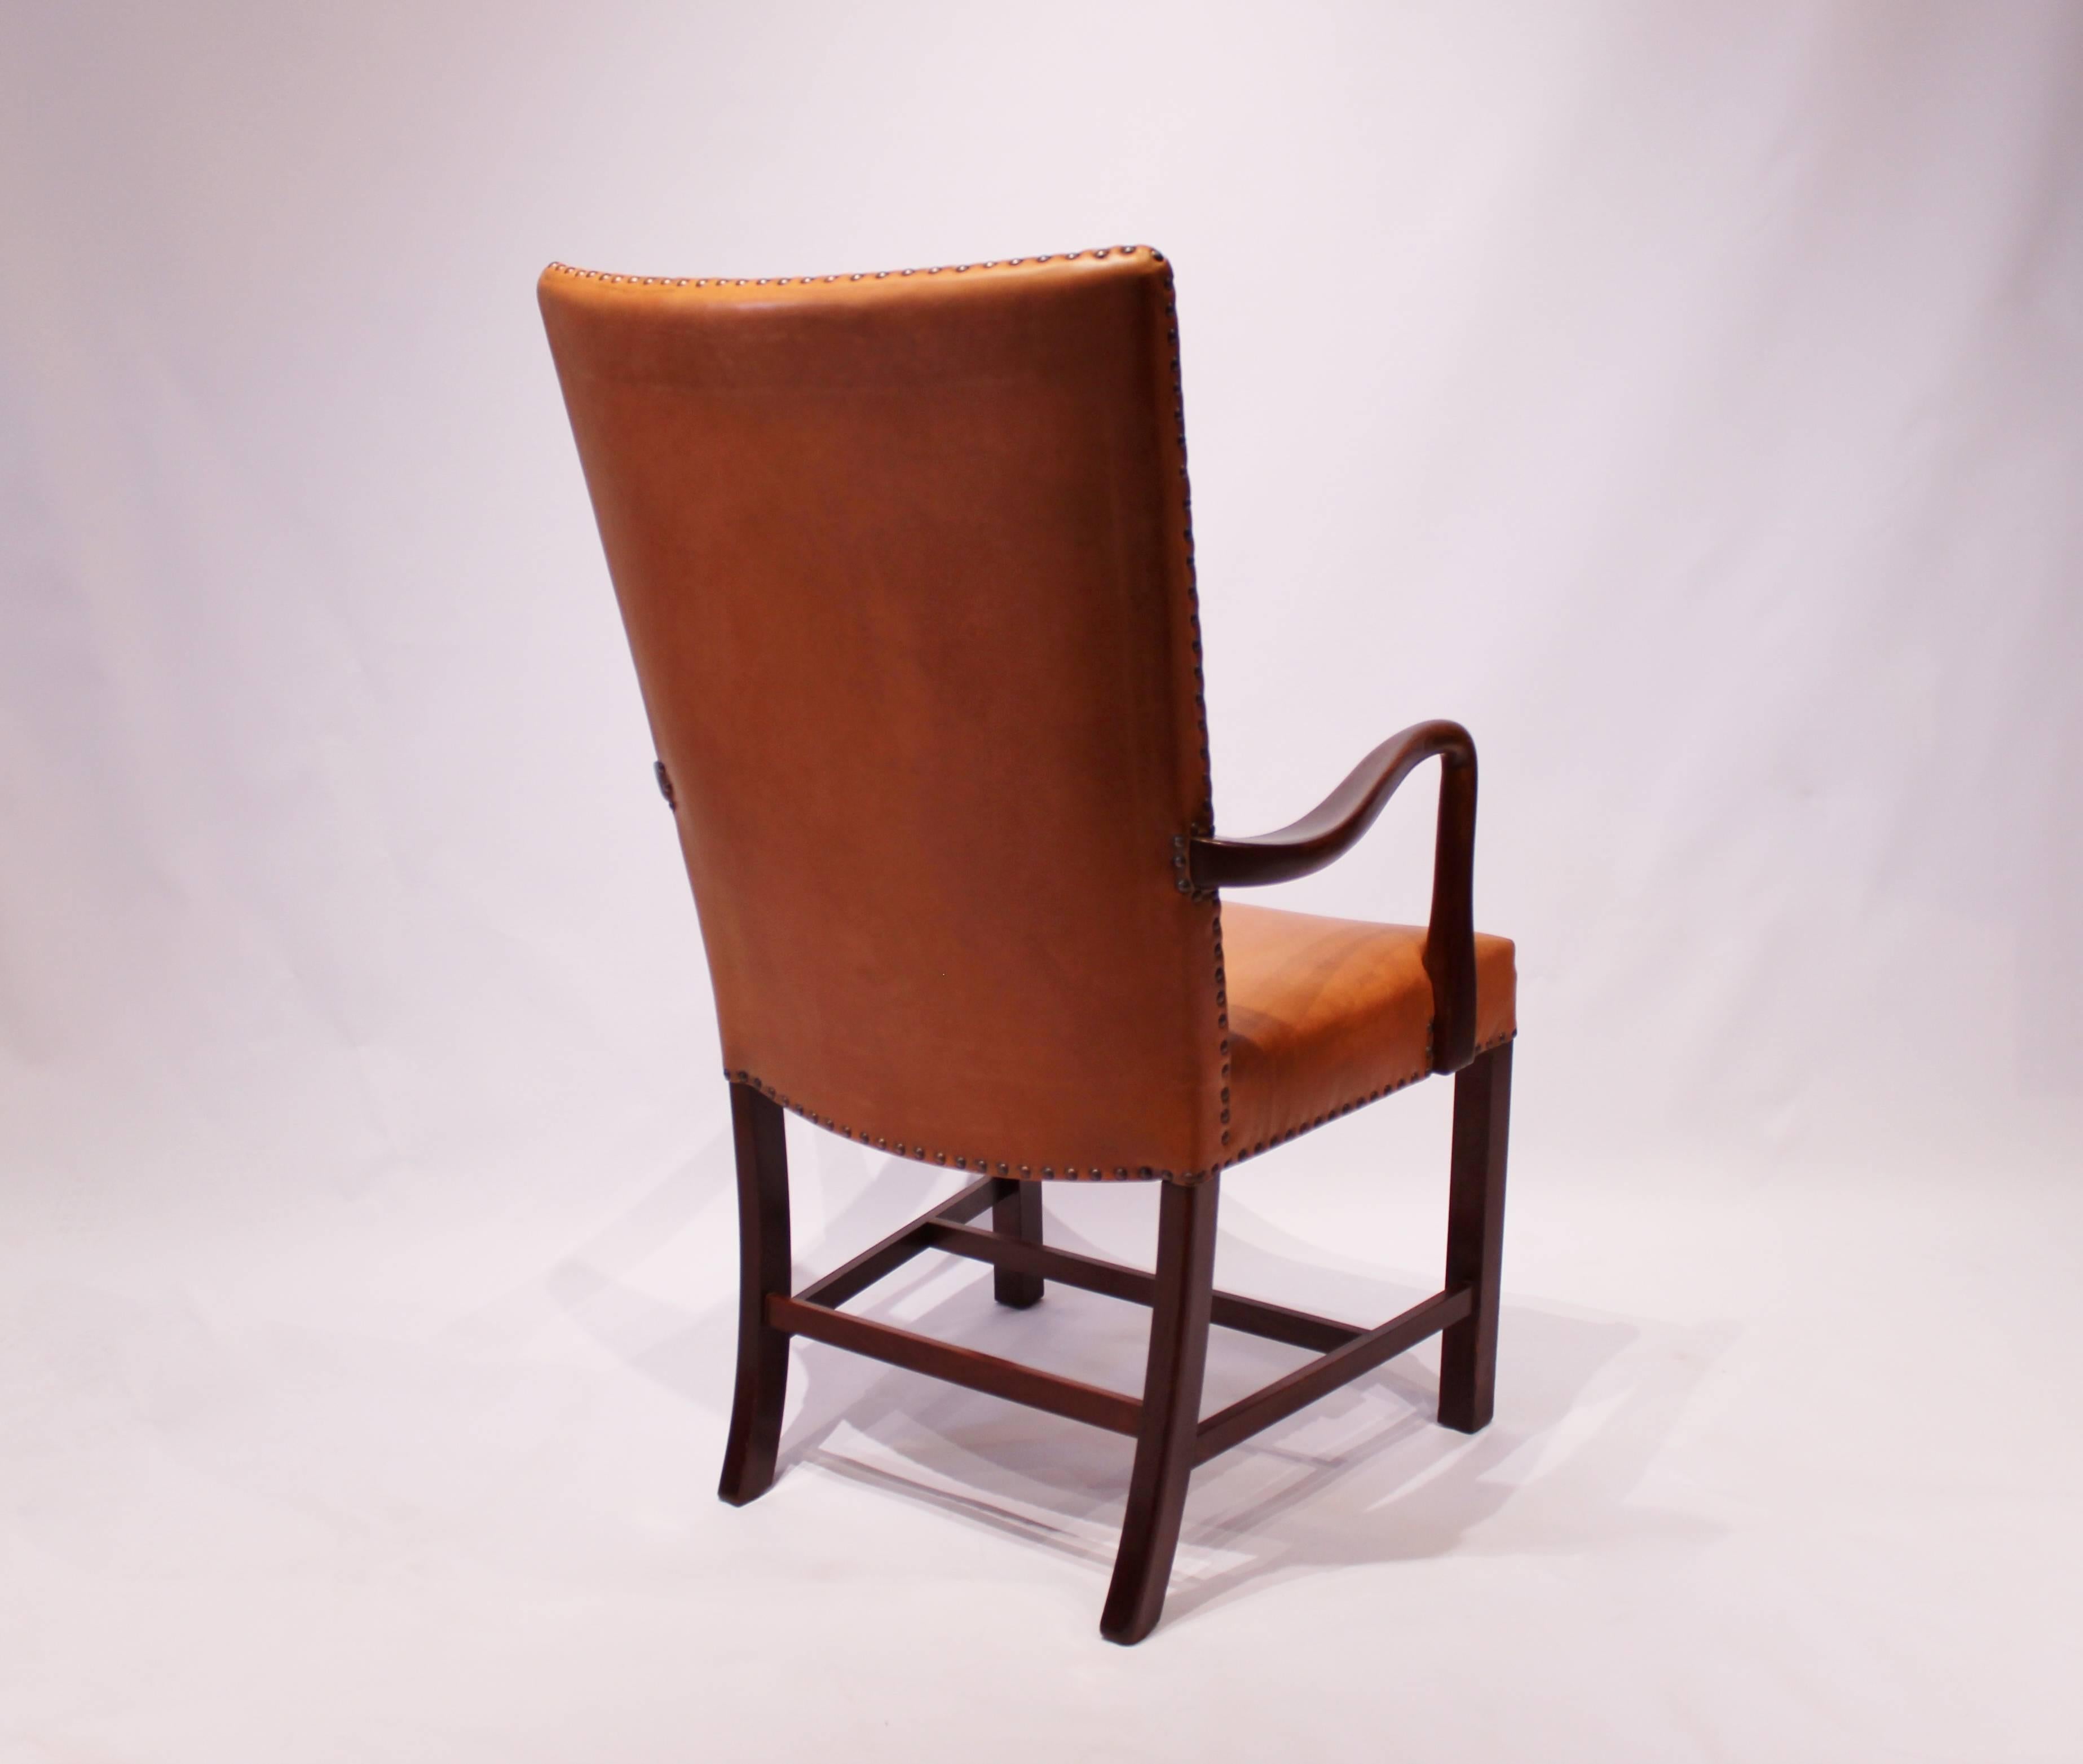 Scandinavian Modern Armchair Upholstered in Cognac Elegance Leather by Fritz Hansen, 1944 For Sale